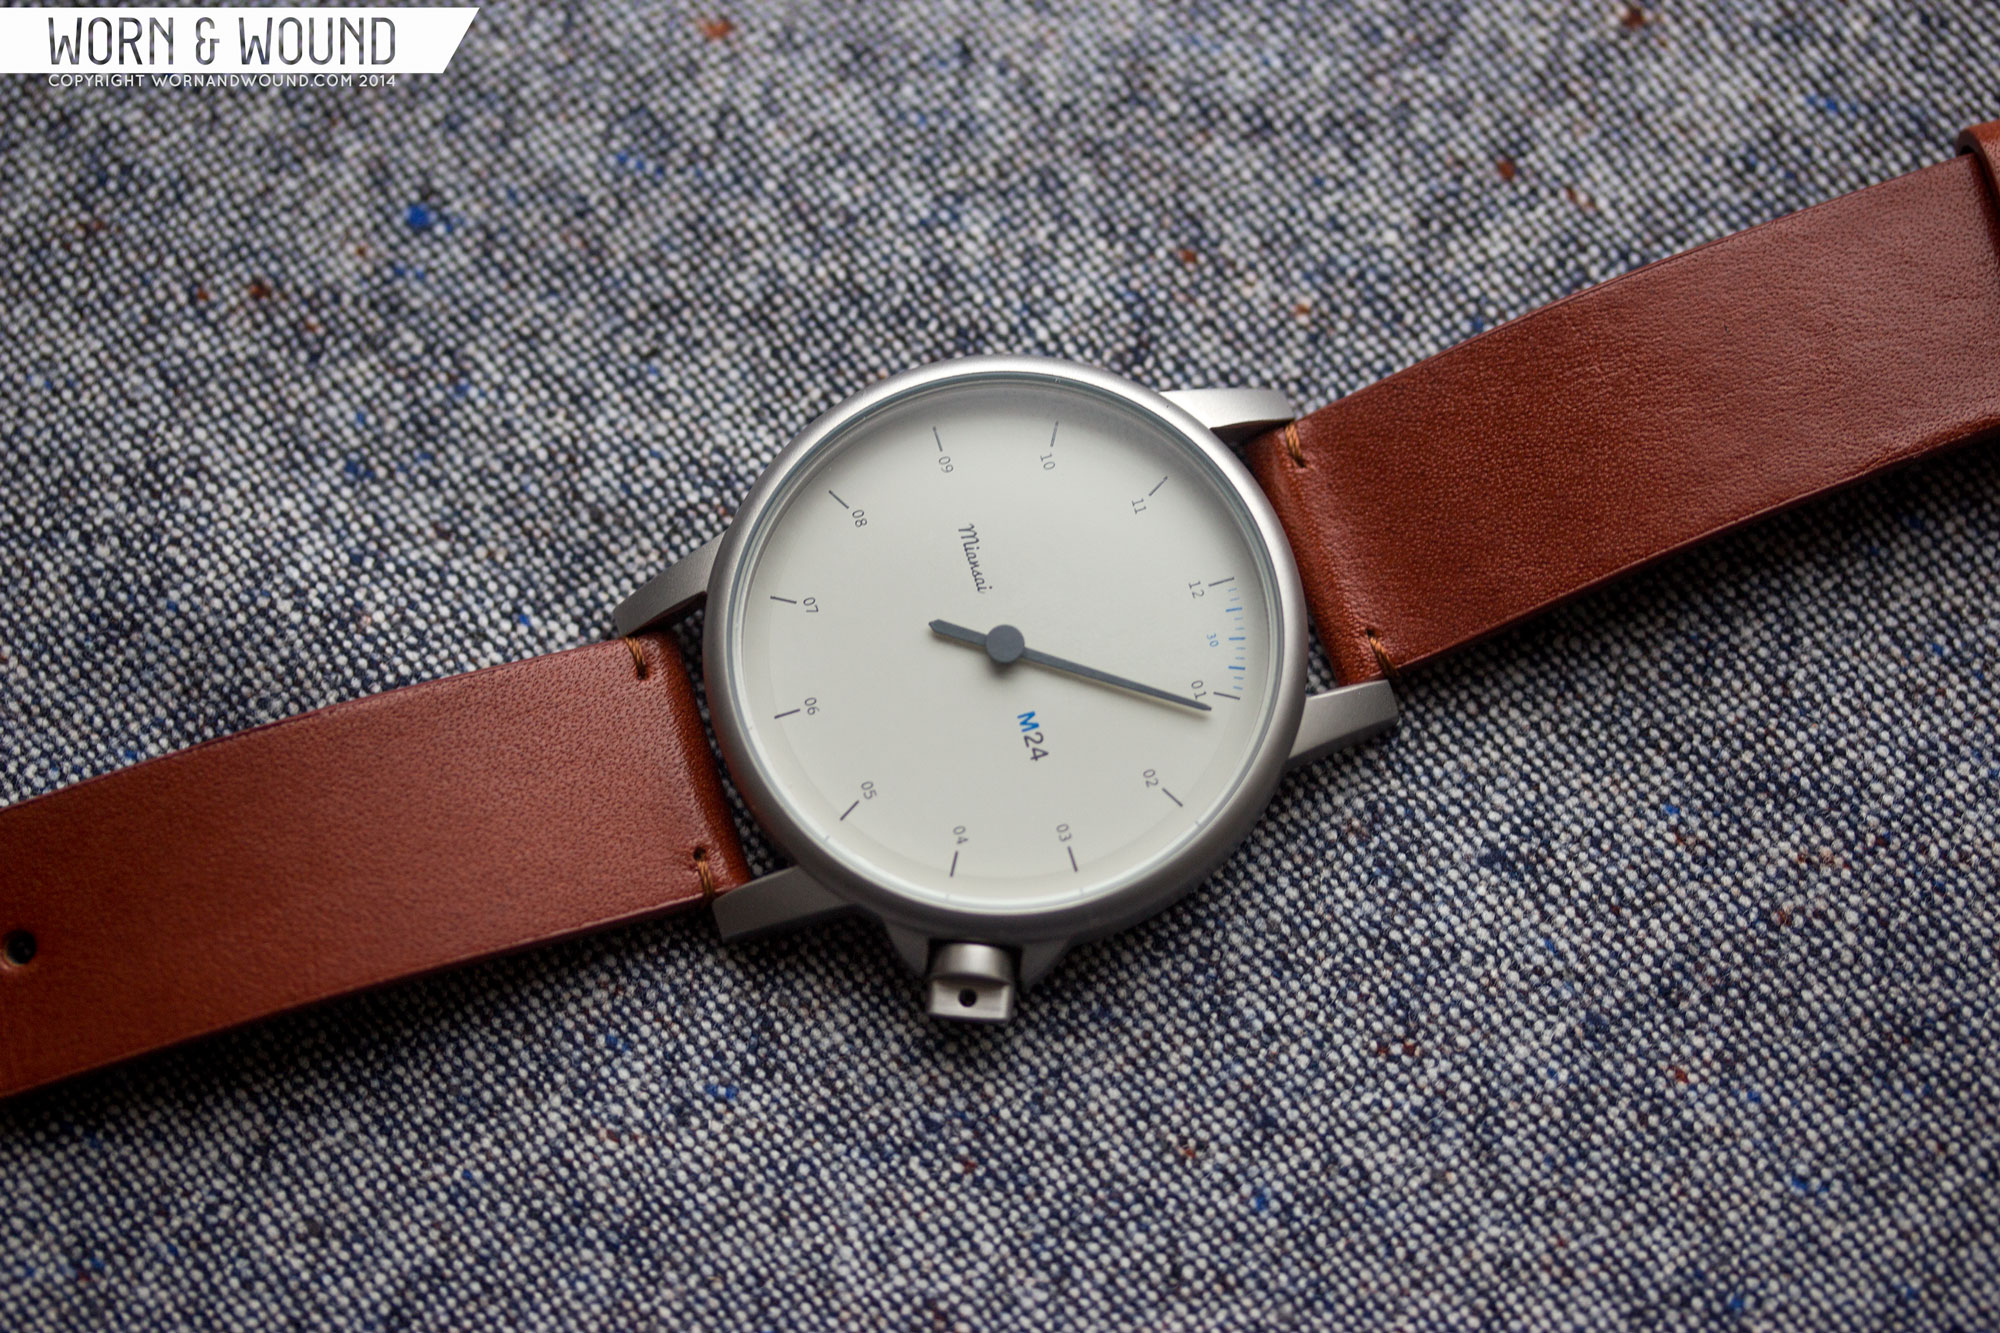 Miansai Replacement Watch Strap, Leather